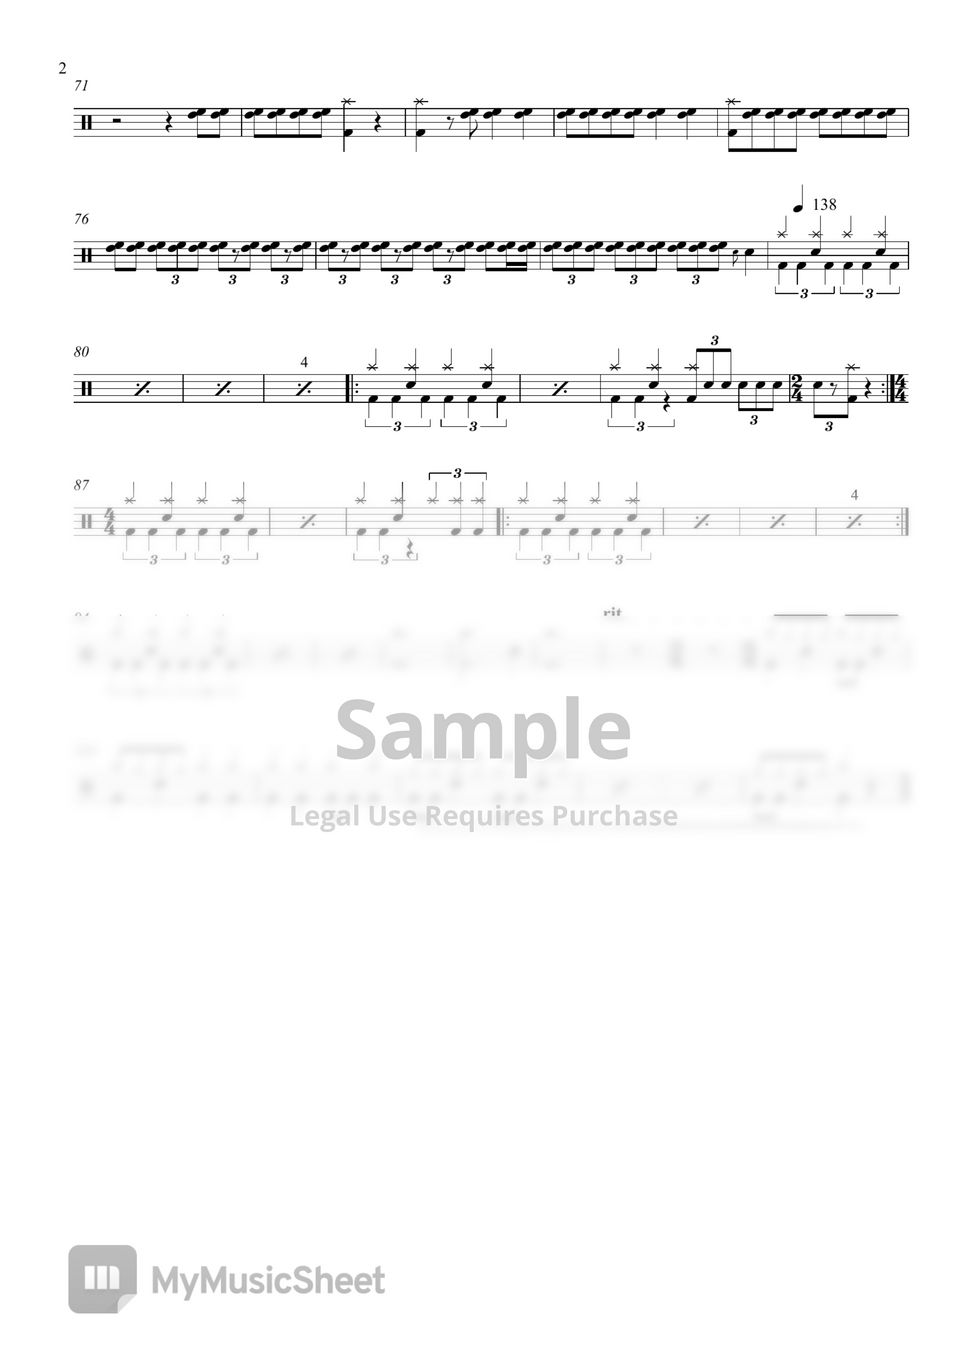 Queen - Bohemian Rhapsody by Drum Transcription: Leo Alvarado